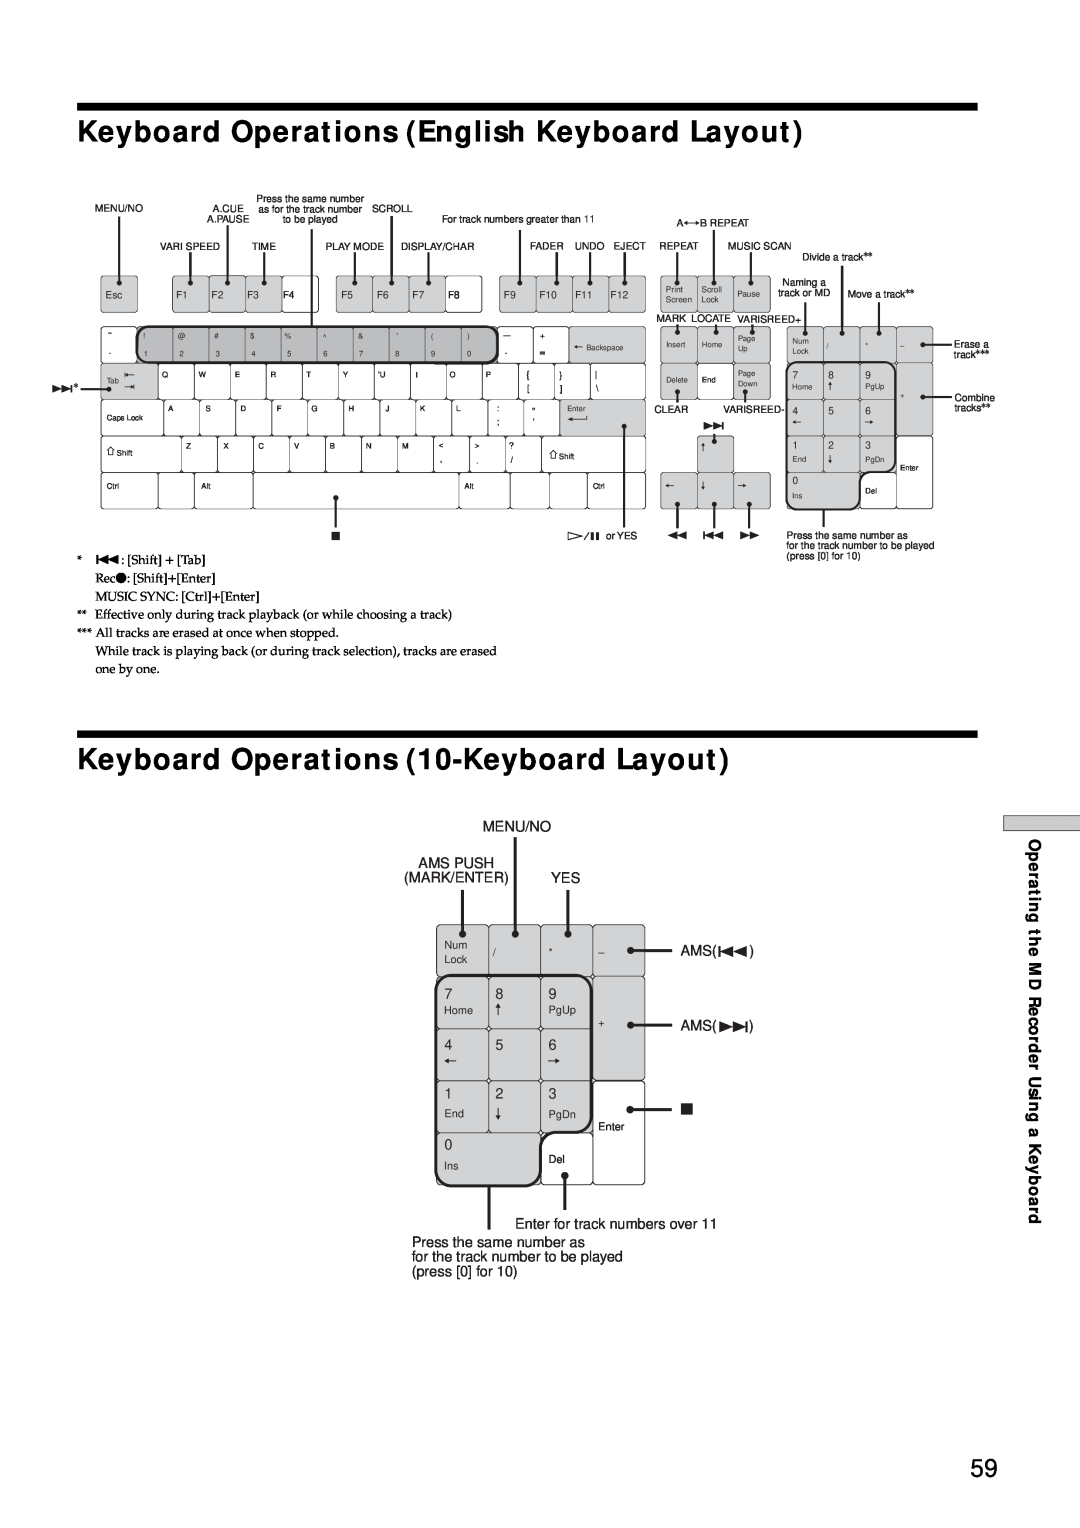 Sony MDS-E10 manual Keyboard Operations English Keyboard Layout, Keyboard Operations 10-KeyboardLayout, Operating the 